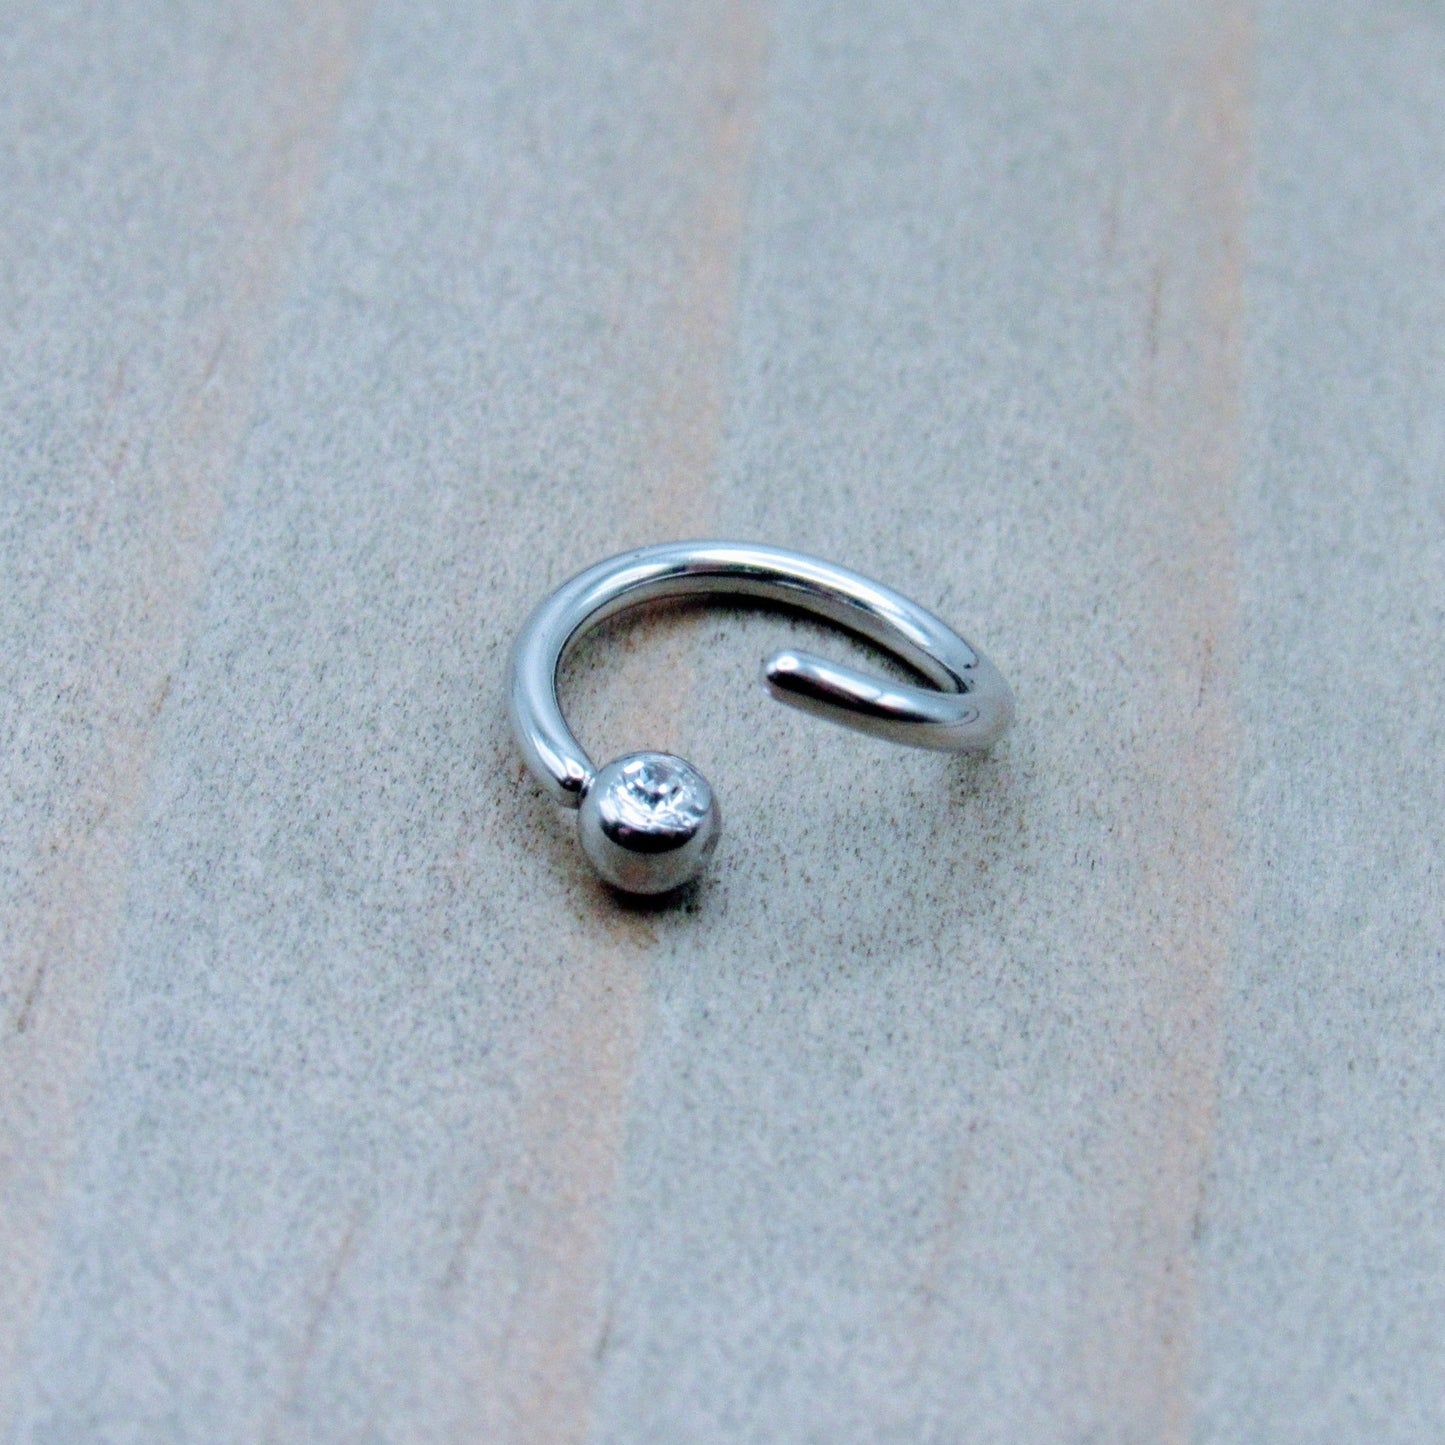 16g CZ gemstone forward facing fixed bead ring hoop earring 316L stainless steel annealed piercing jewelry - Siren Body Jewelry